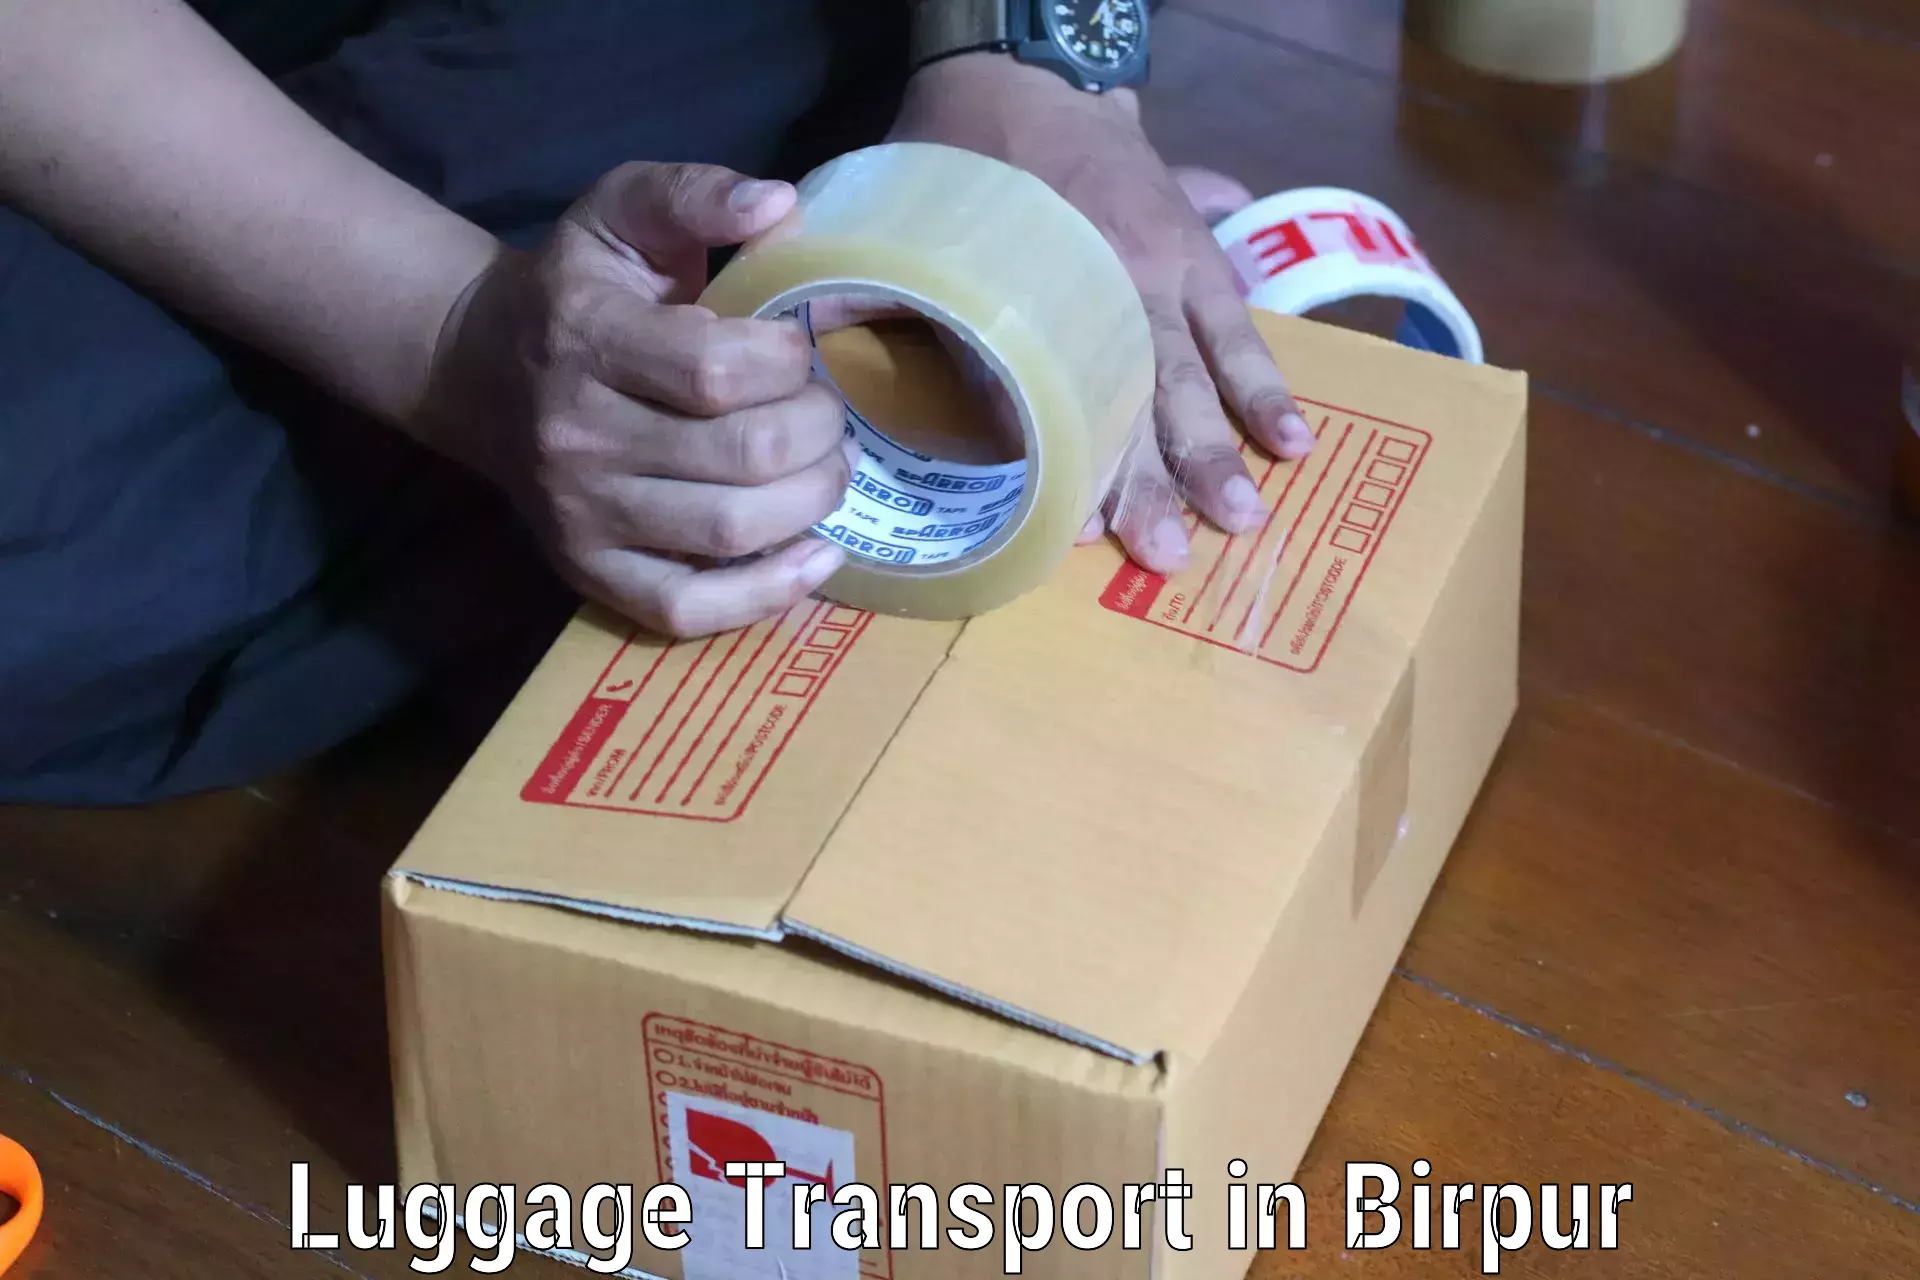 Luggage shipping discounts in Birpur